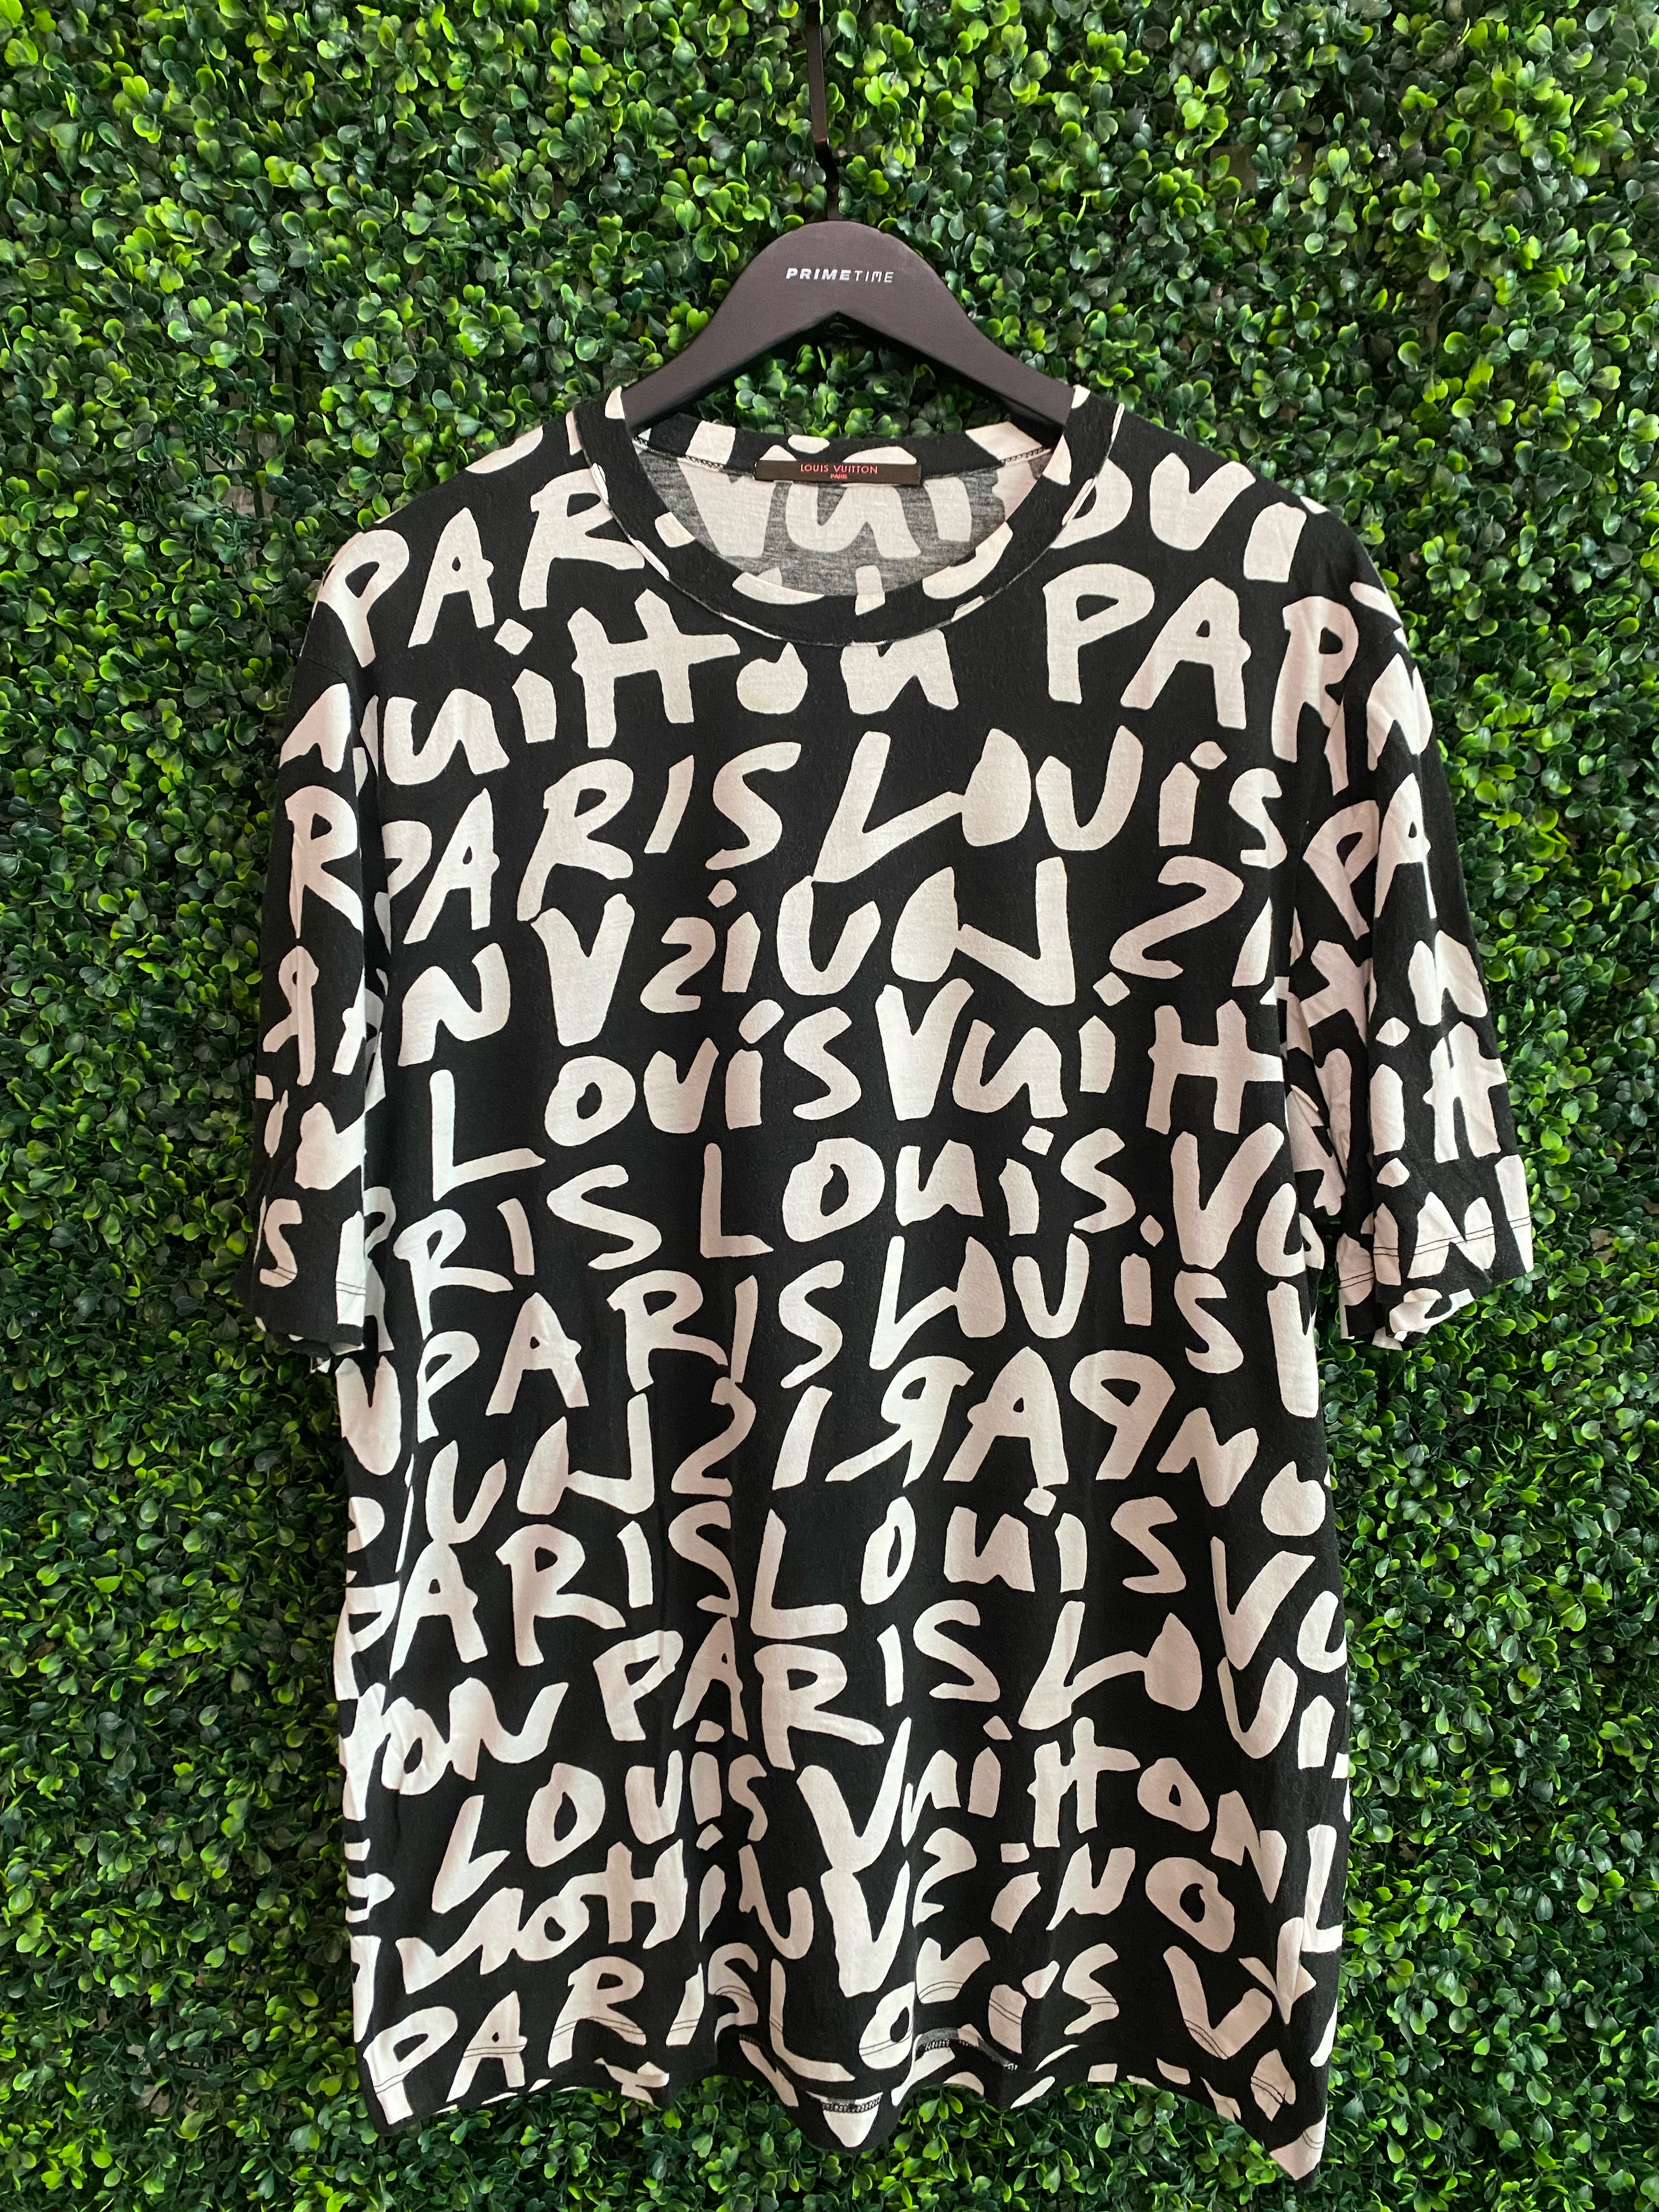 Louis Vuitton Stephen Sprouse Graffiti Print T-Shirt - Black T